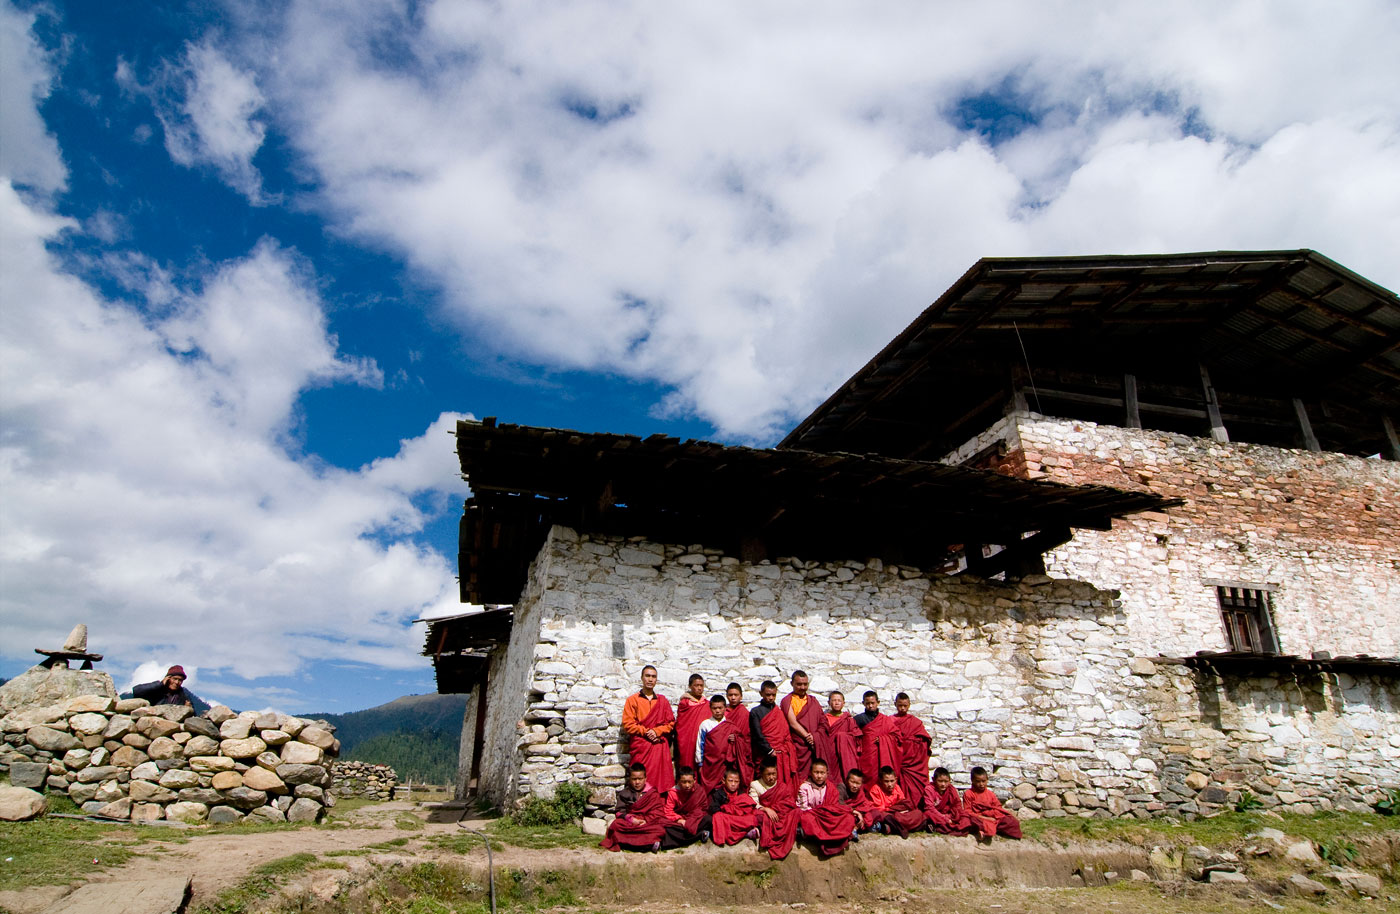 Rural monastery, Phobjikha, 2010